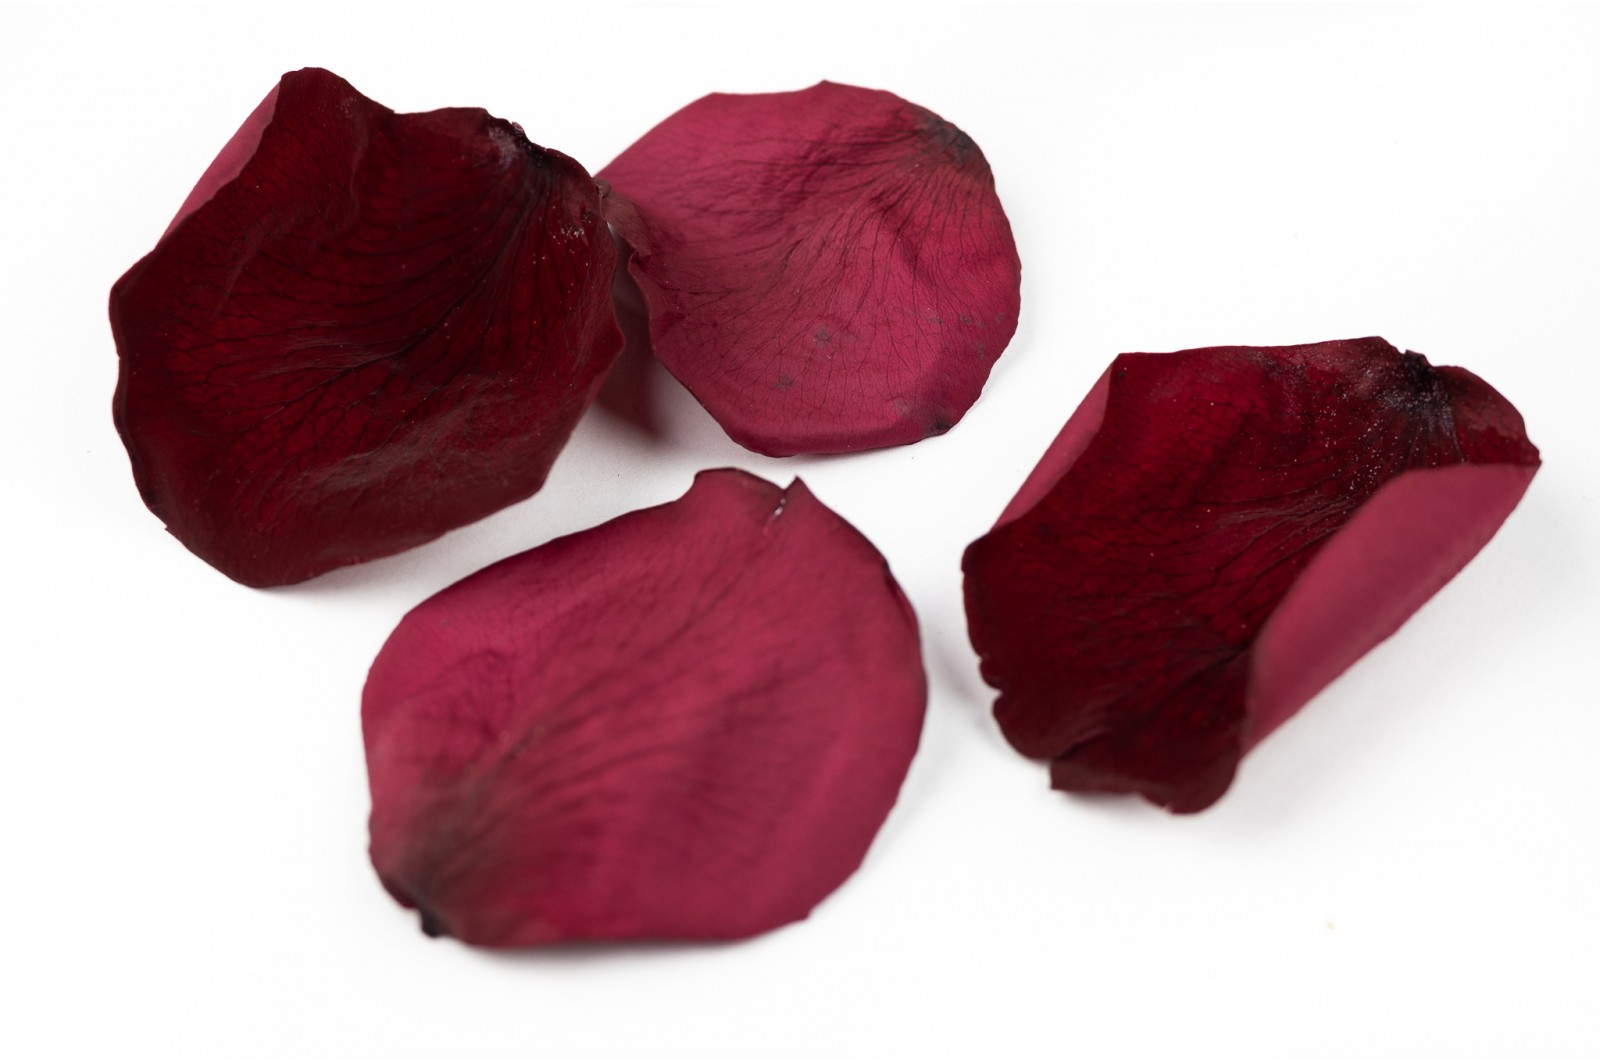 preserved-rose-petals-14